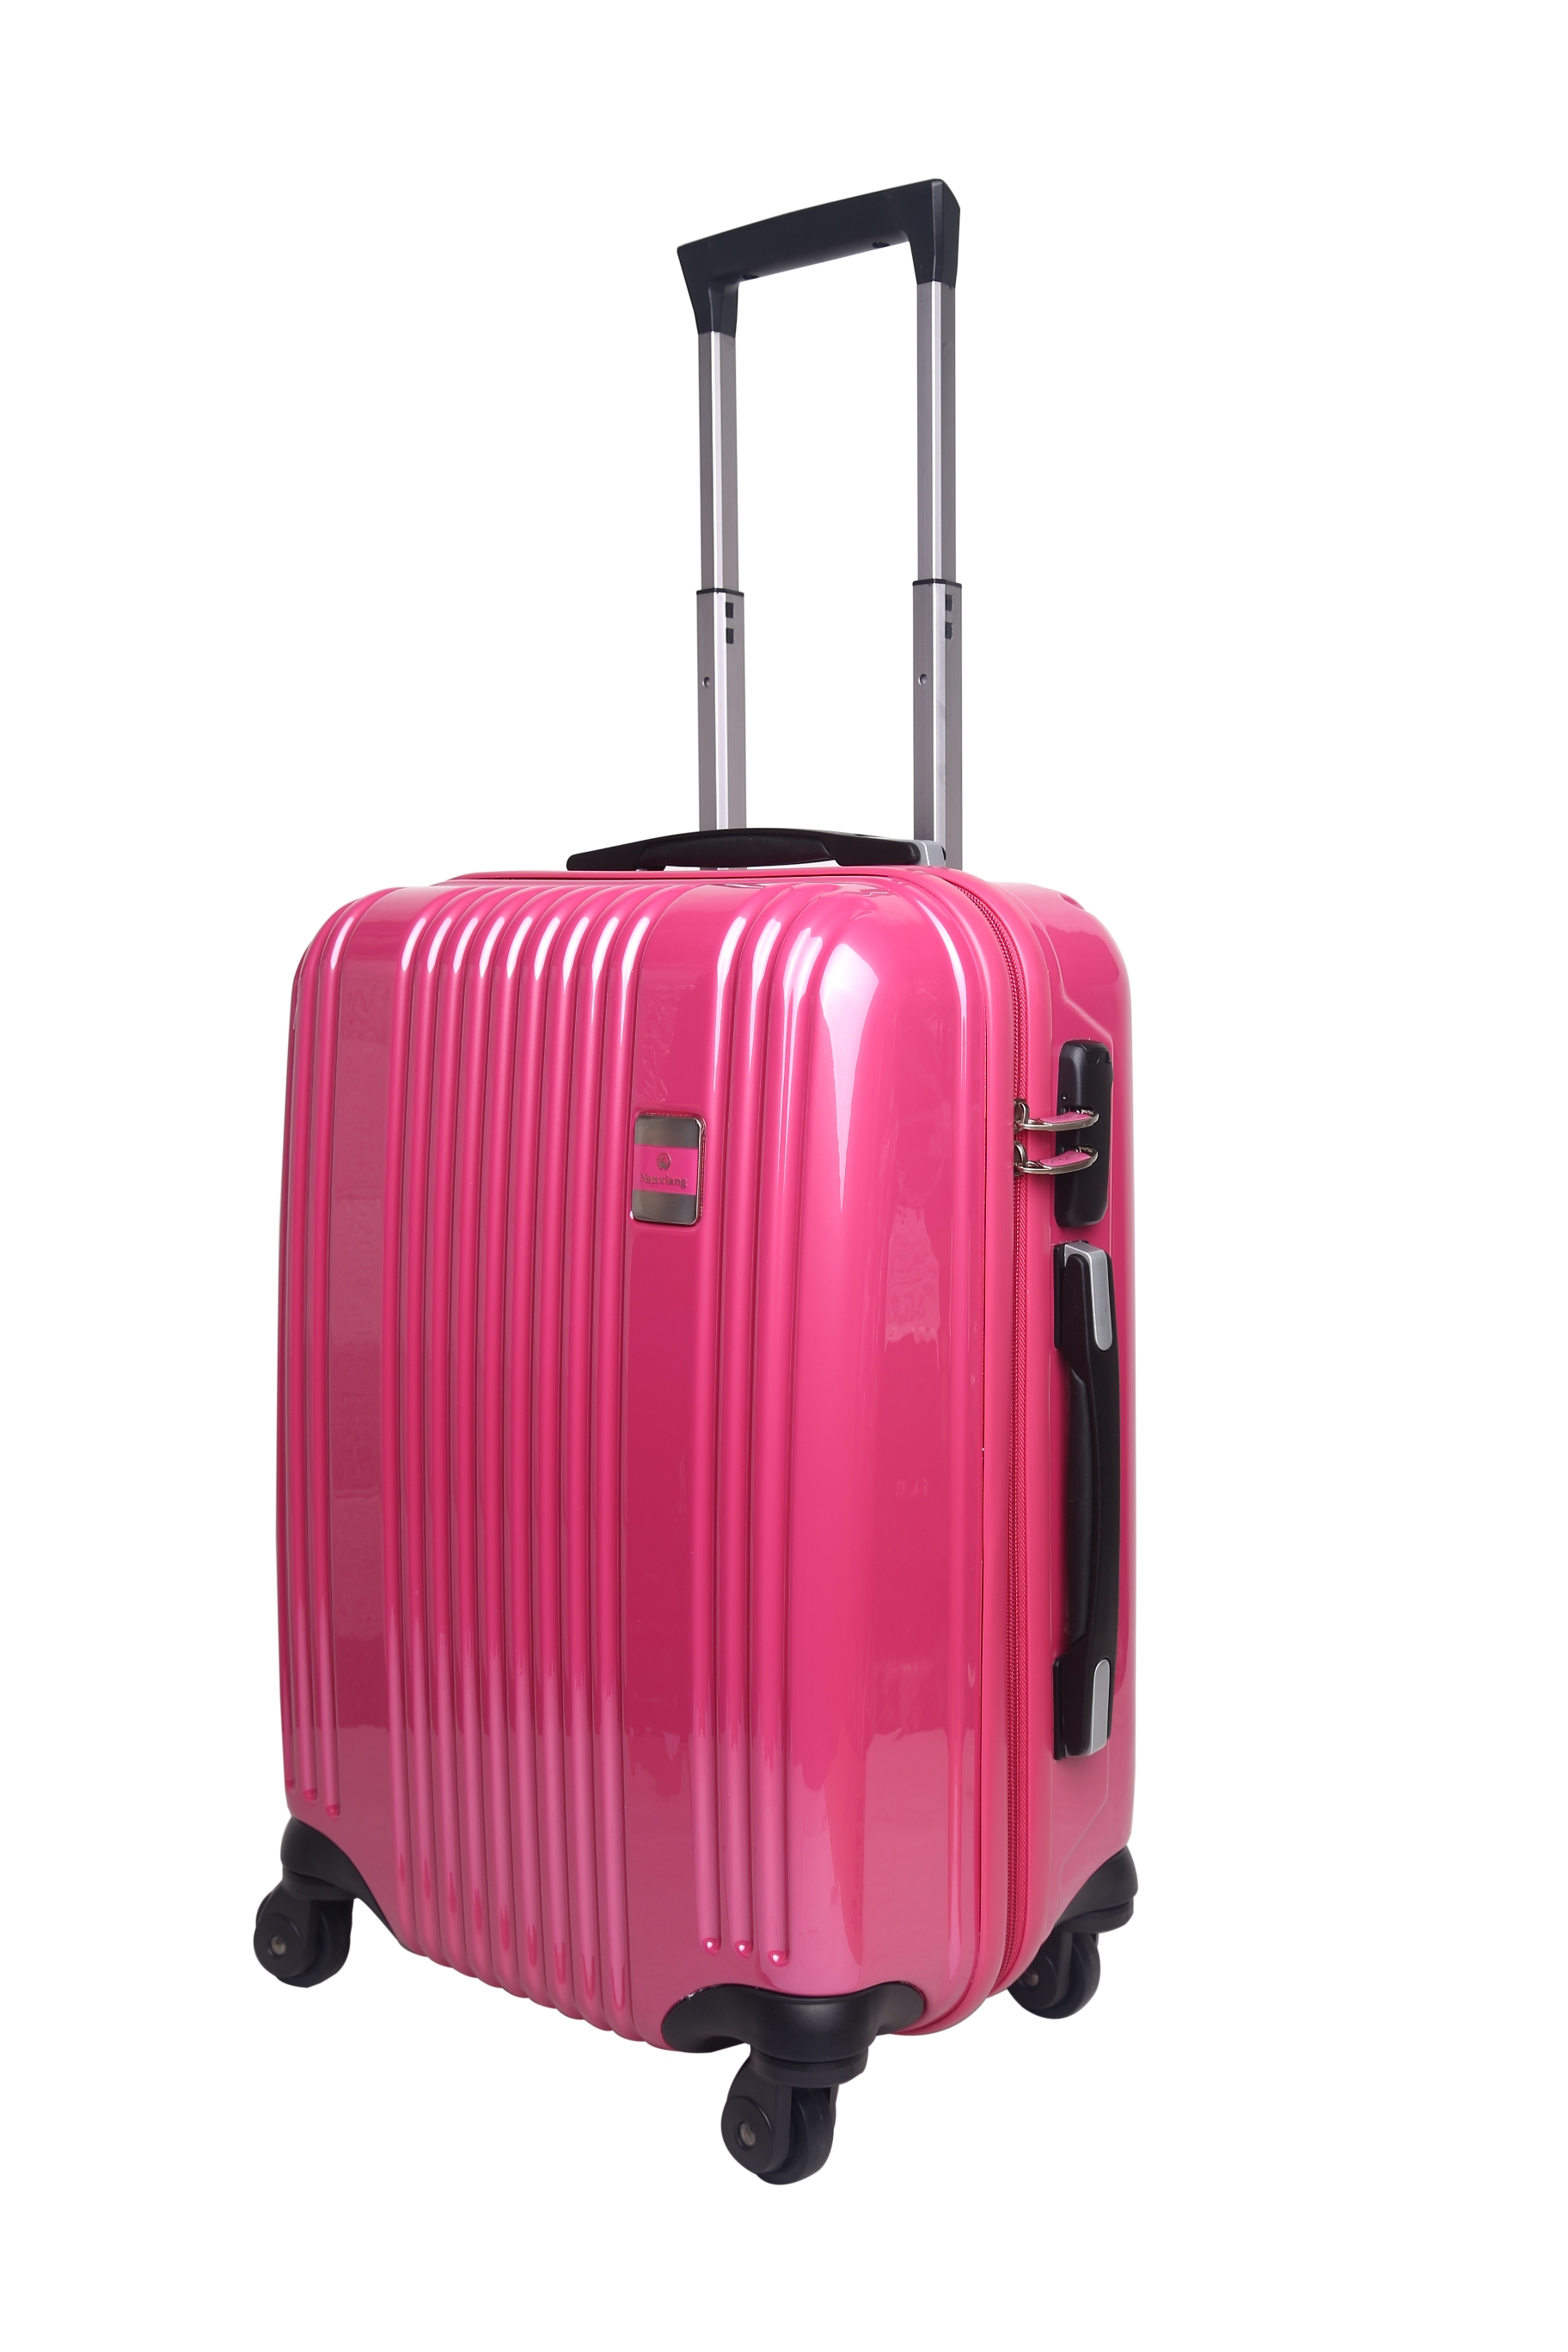 yanteng beautiful cabin suitcase in colorful choice